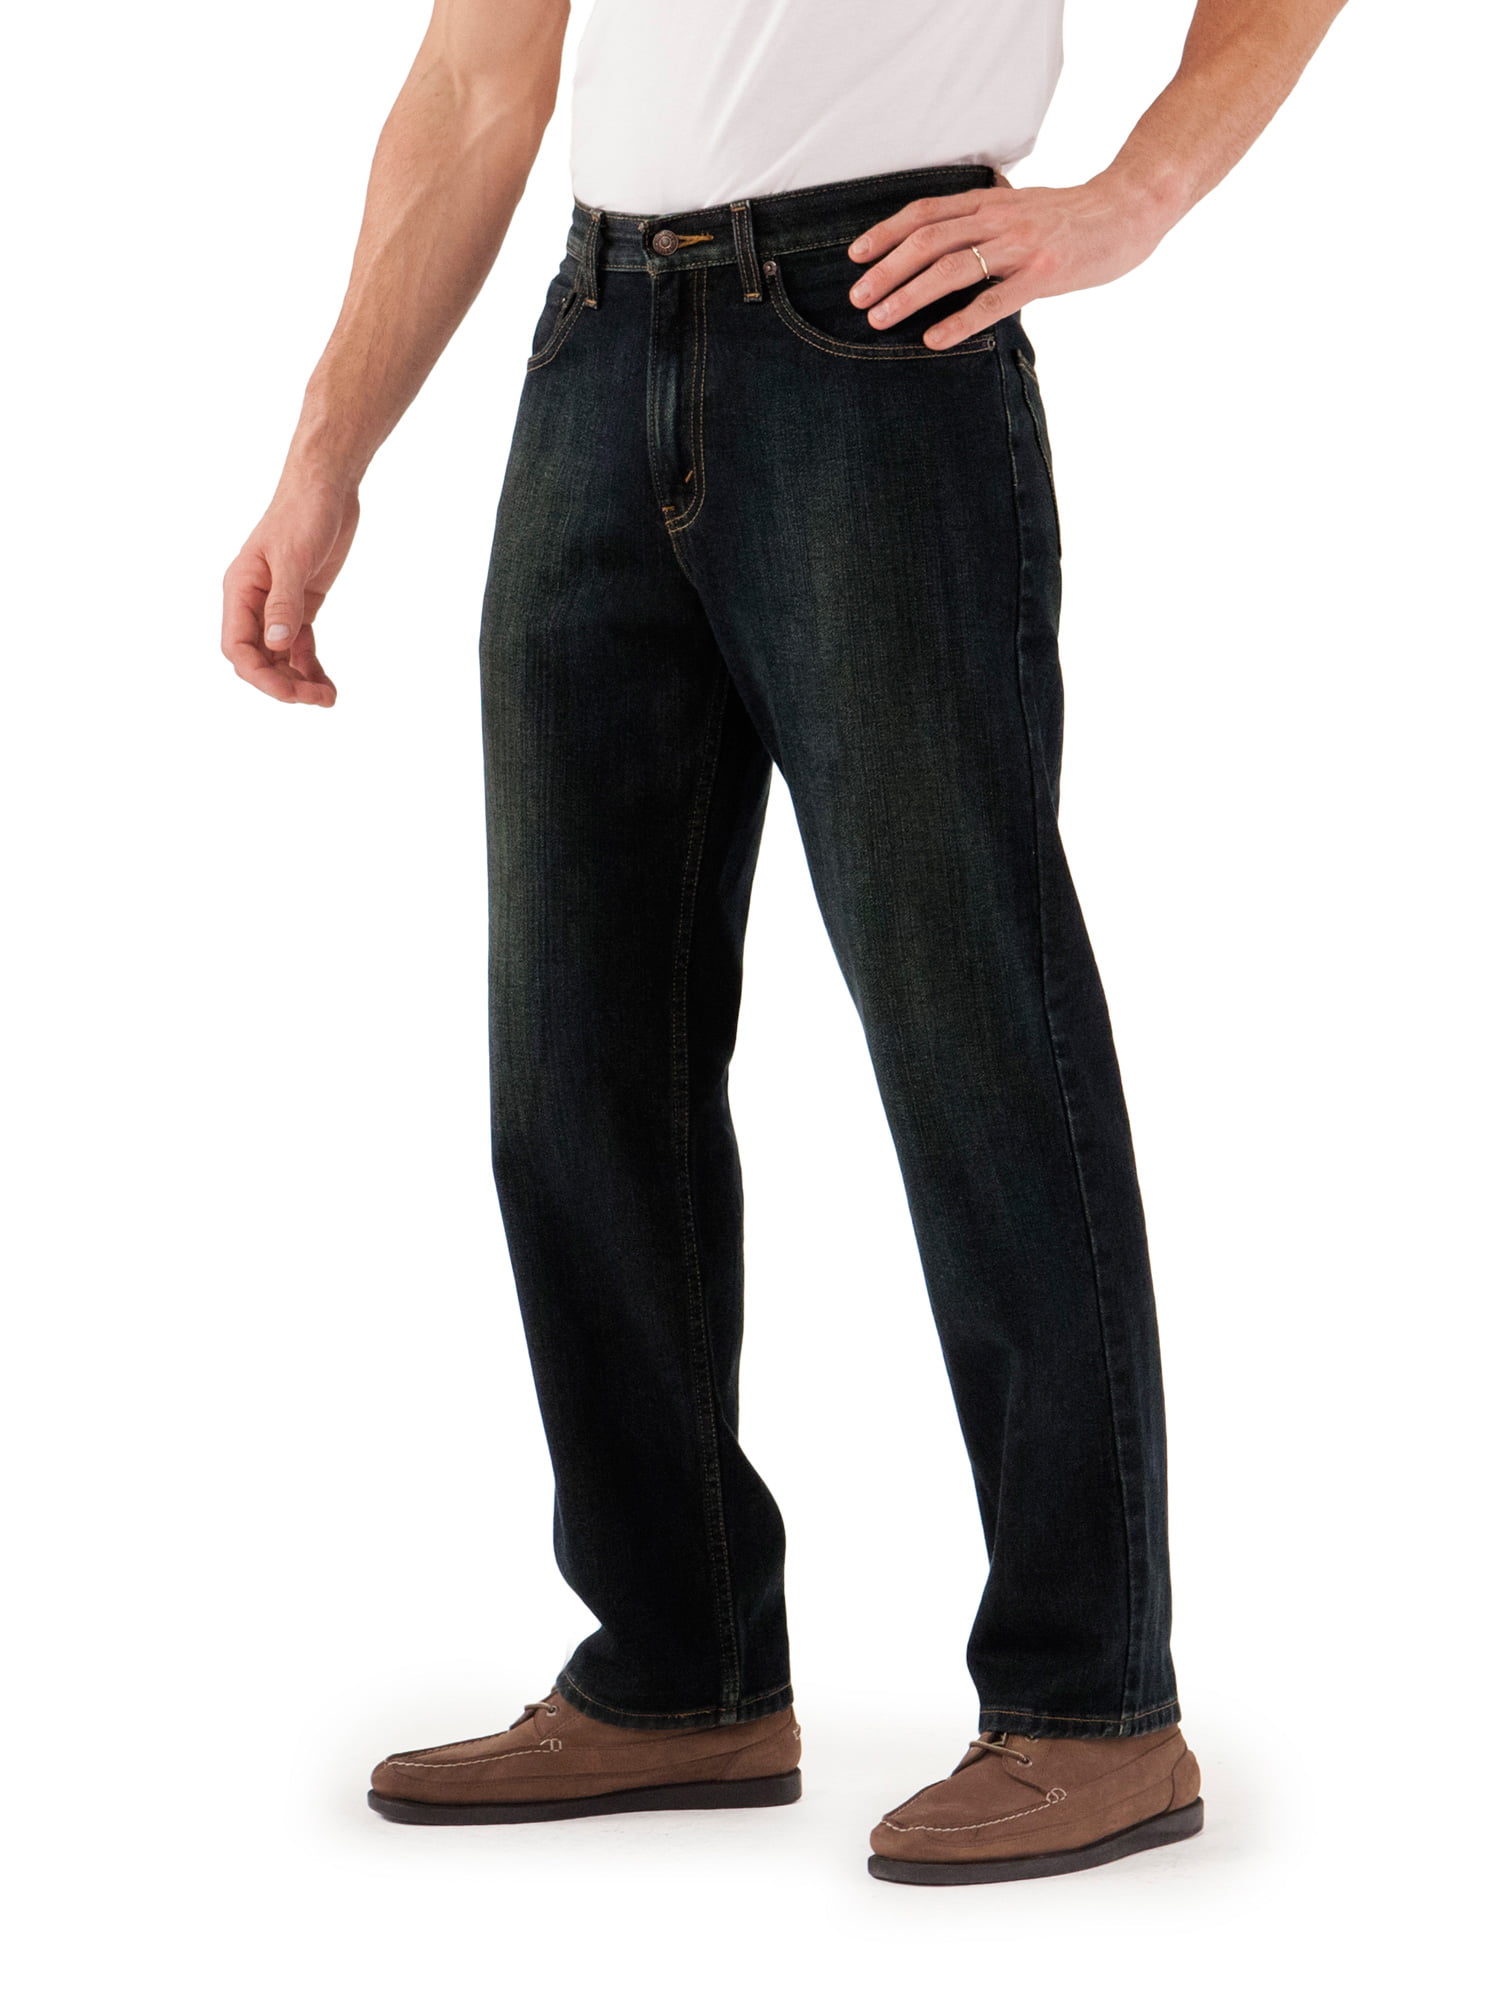 levi's ribcage jeans canada